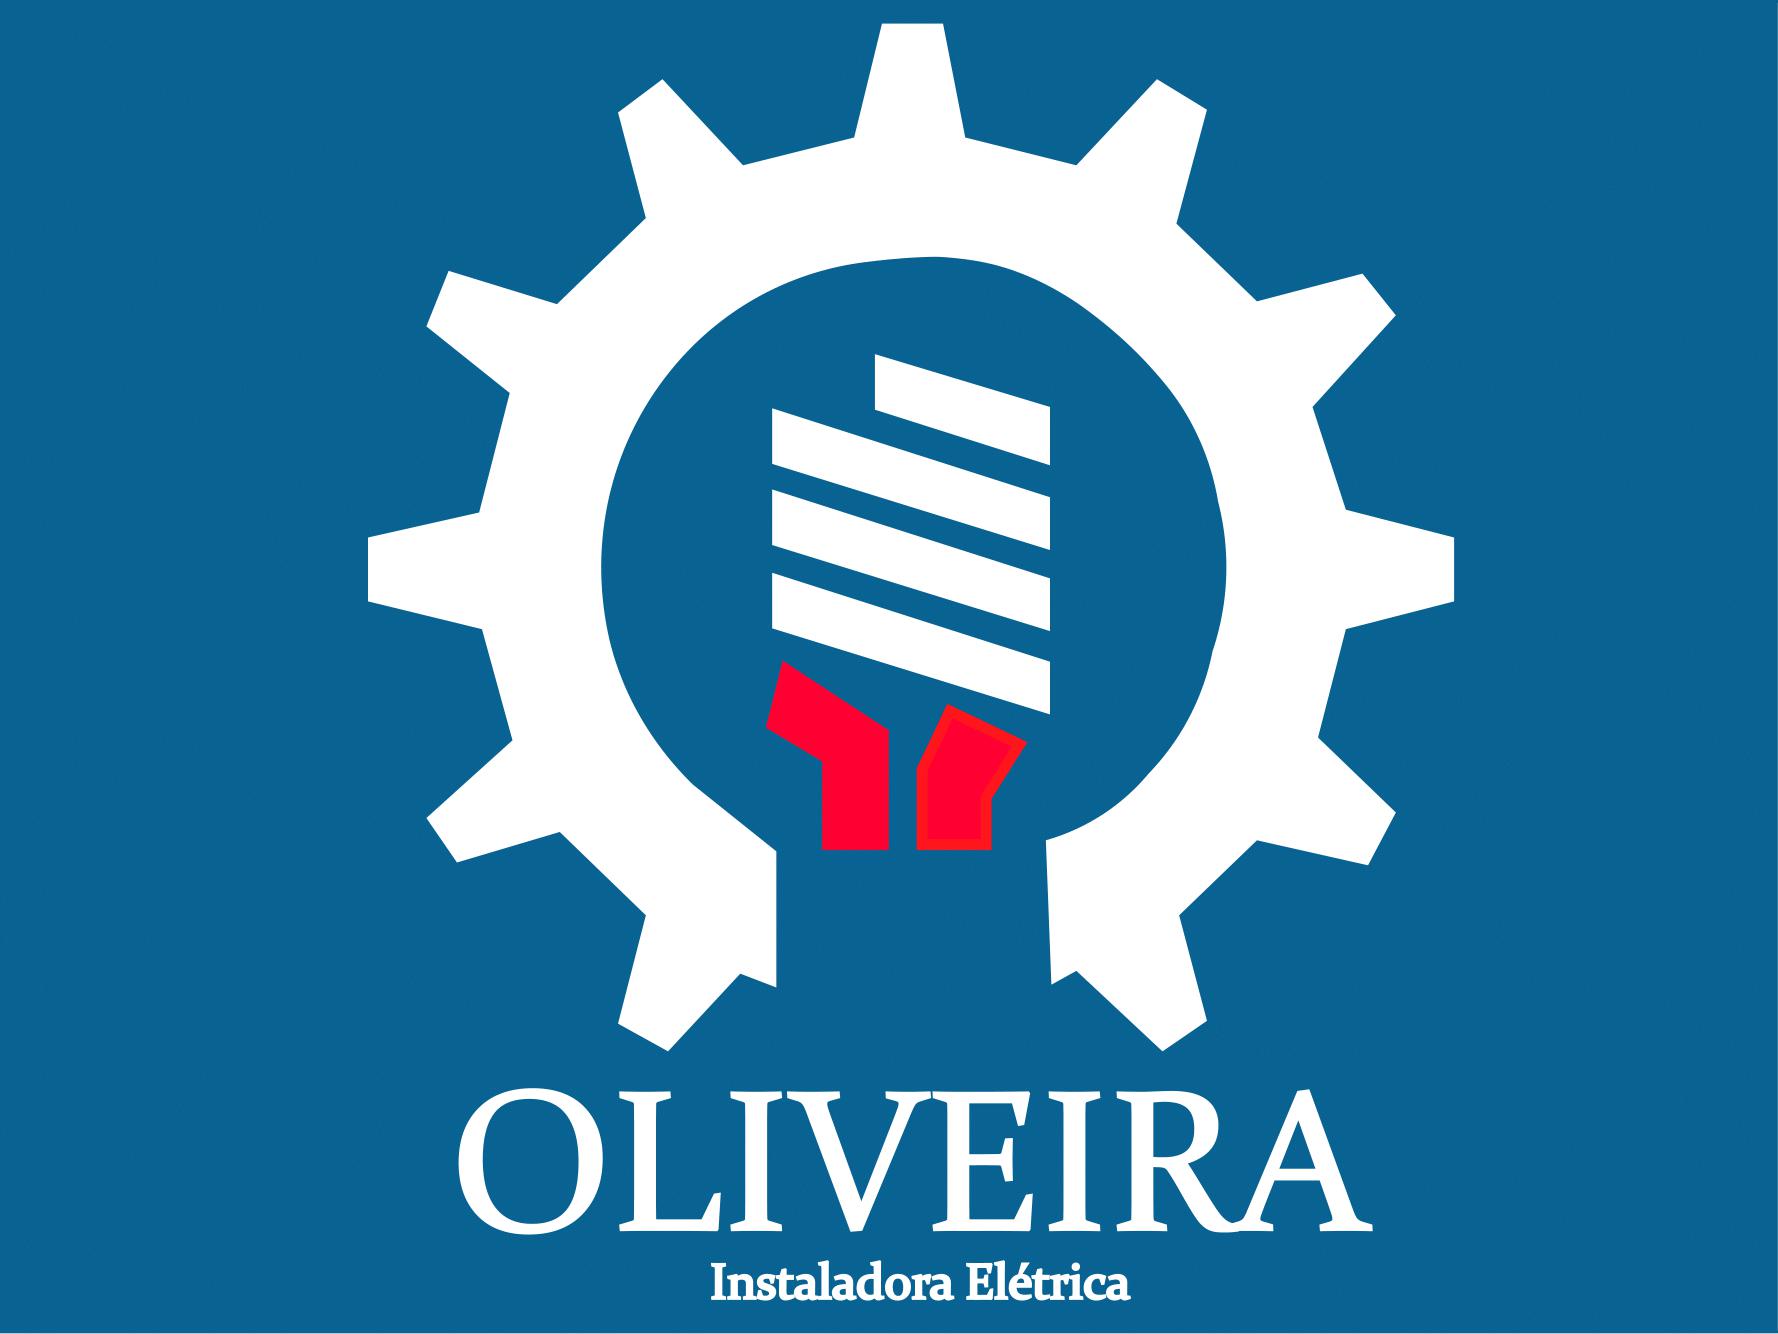 Oliveira Instaladora Elétrica Logo